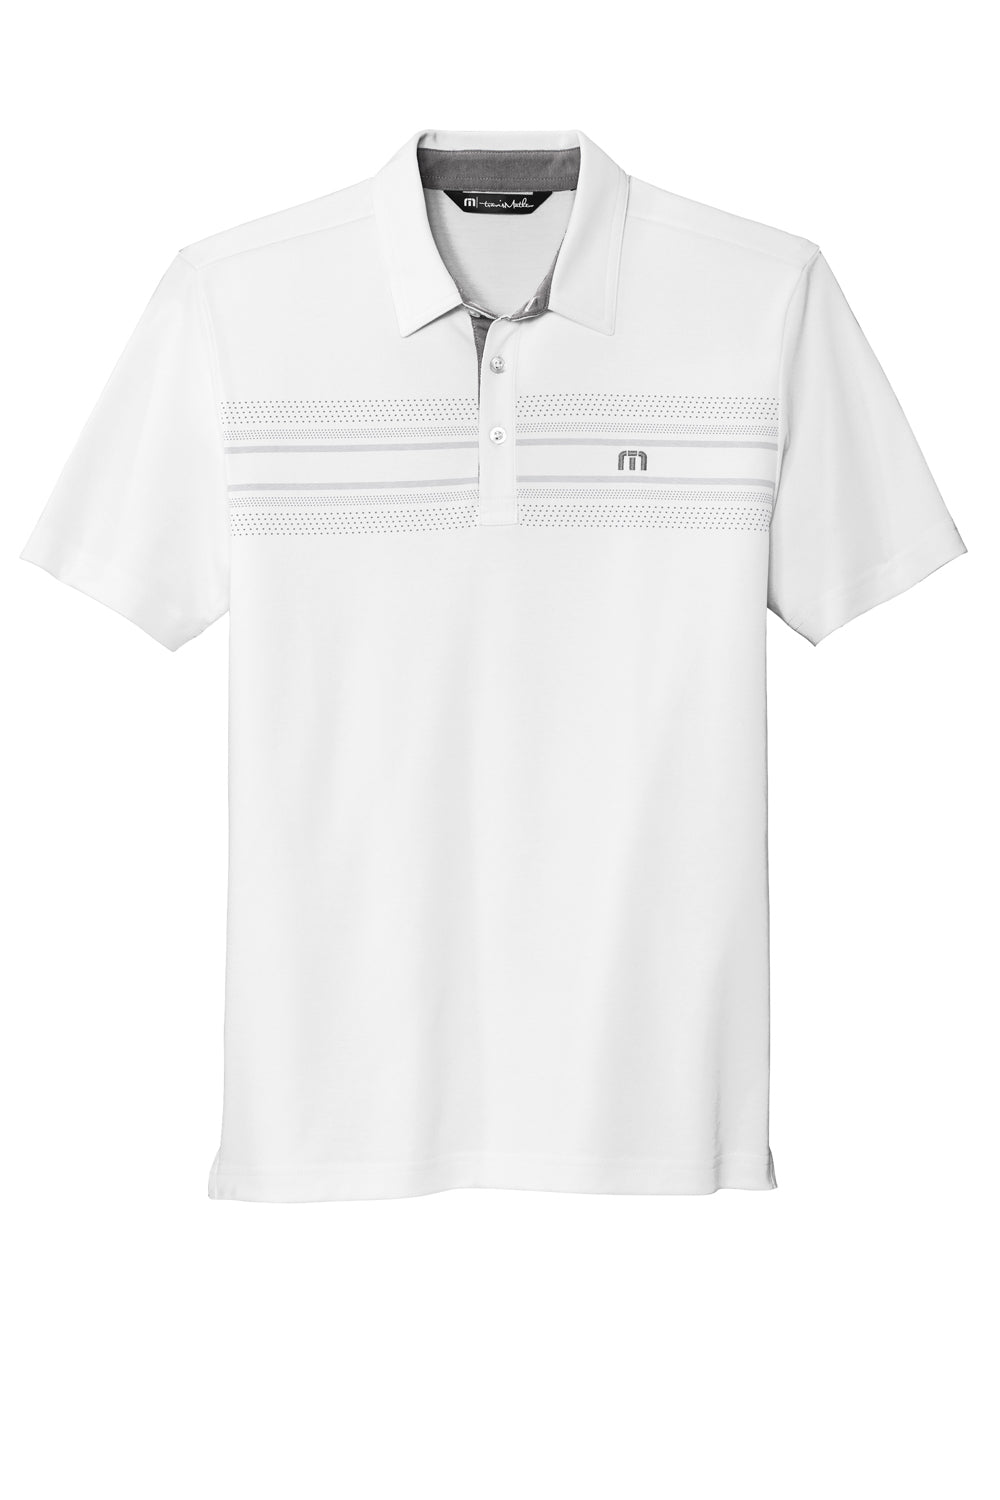 TravisMathew TM1MW450 Mens Monterey Wrinkle Resistant Chest Stripe Short Sleeve Polo Shirt White Flat Front